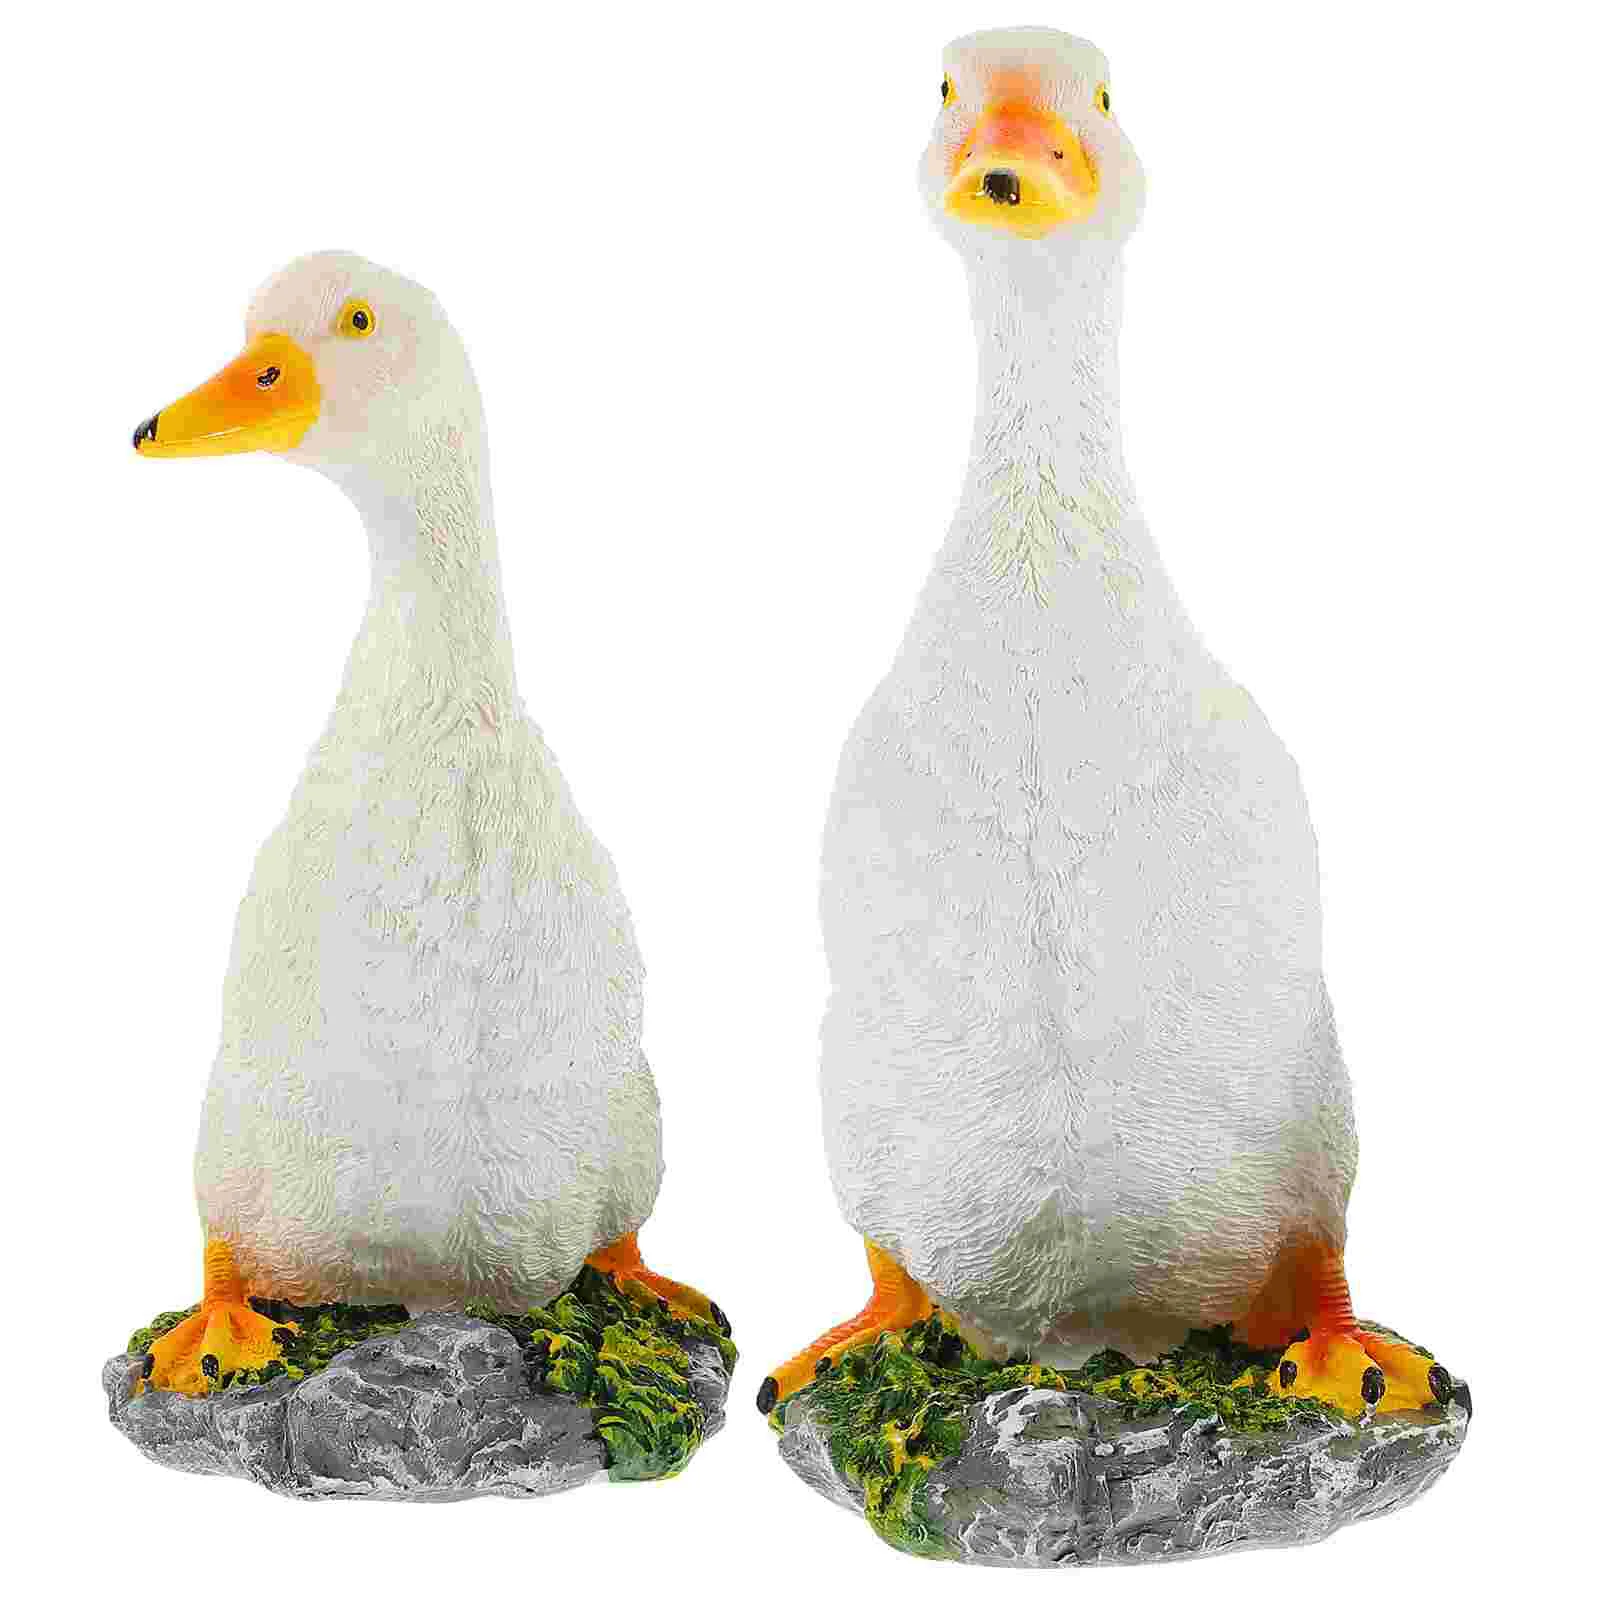 

2 Pcs Simulated Bird Sculpture Figurine Ornaments Garden Decor Resin Crafts Fake Prop Portable Pond